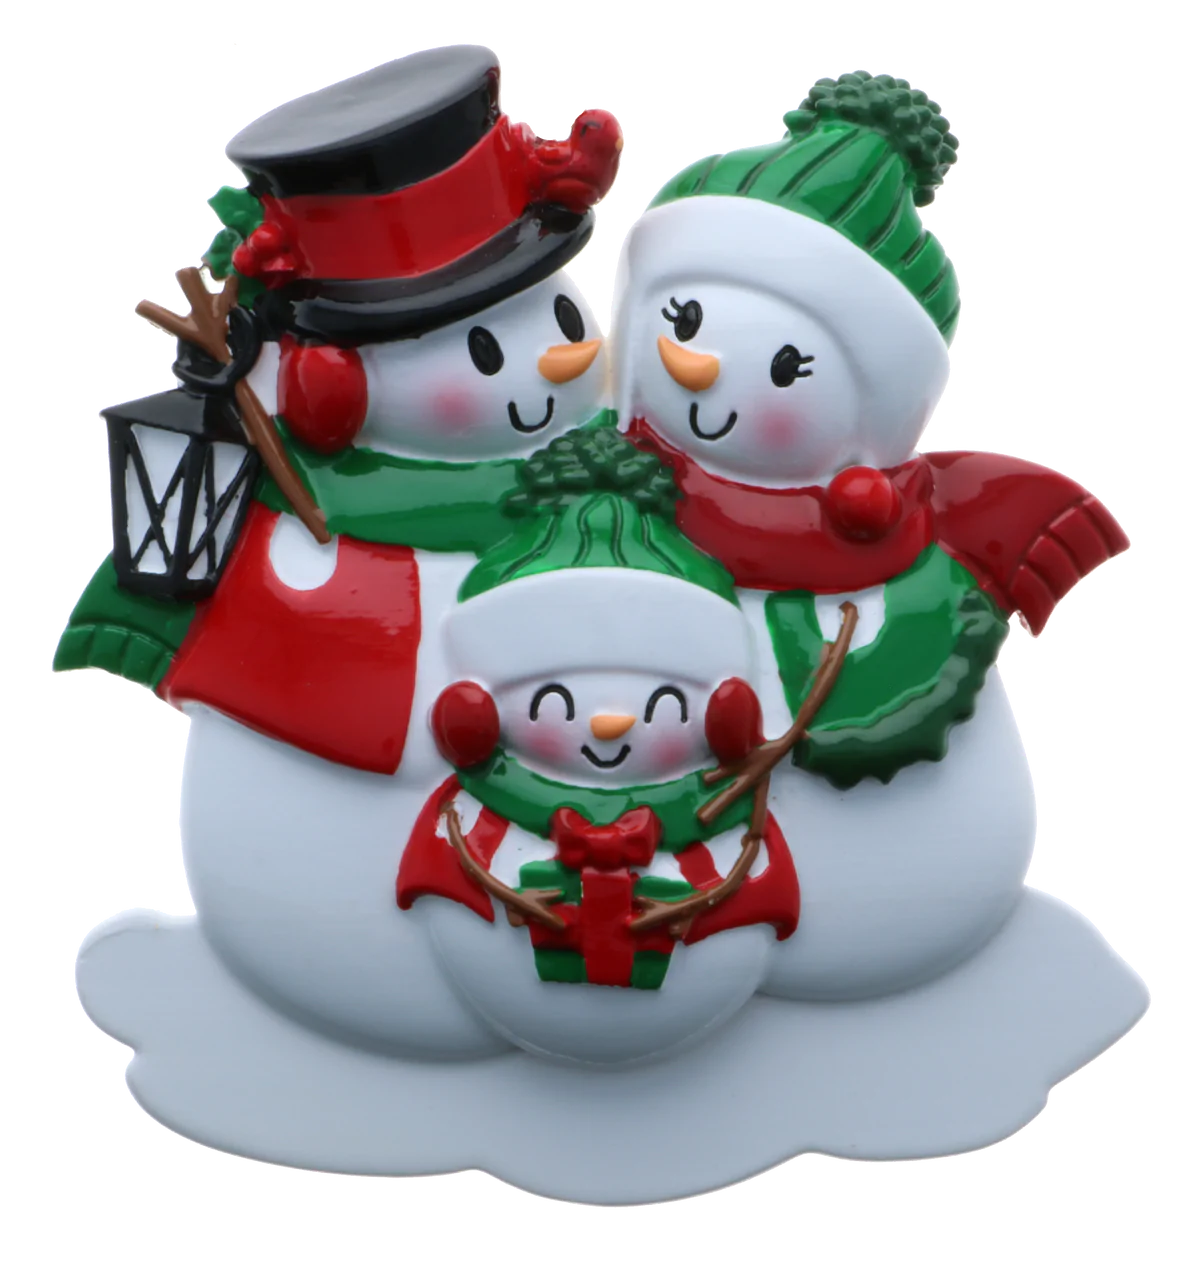 Snowman family - Family of 3